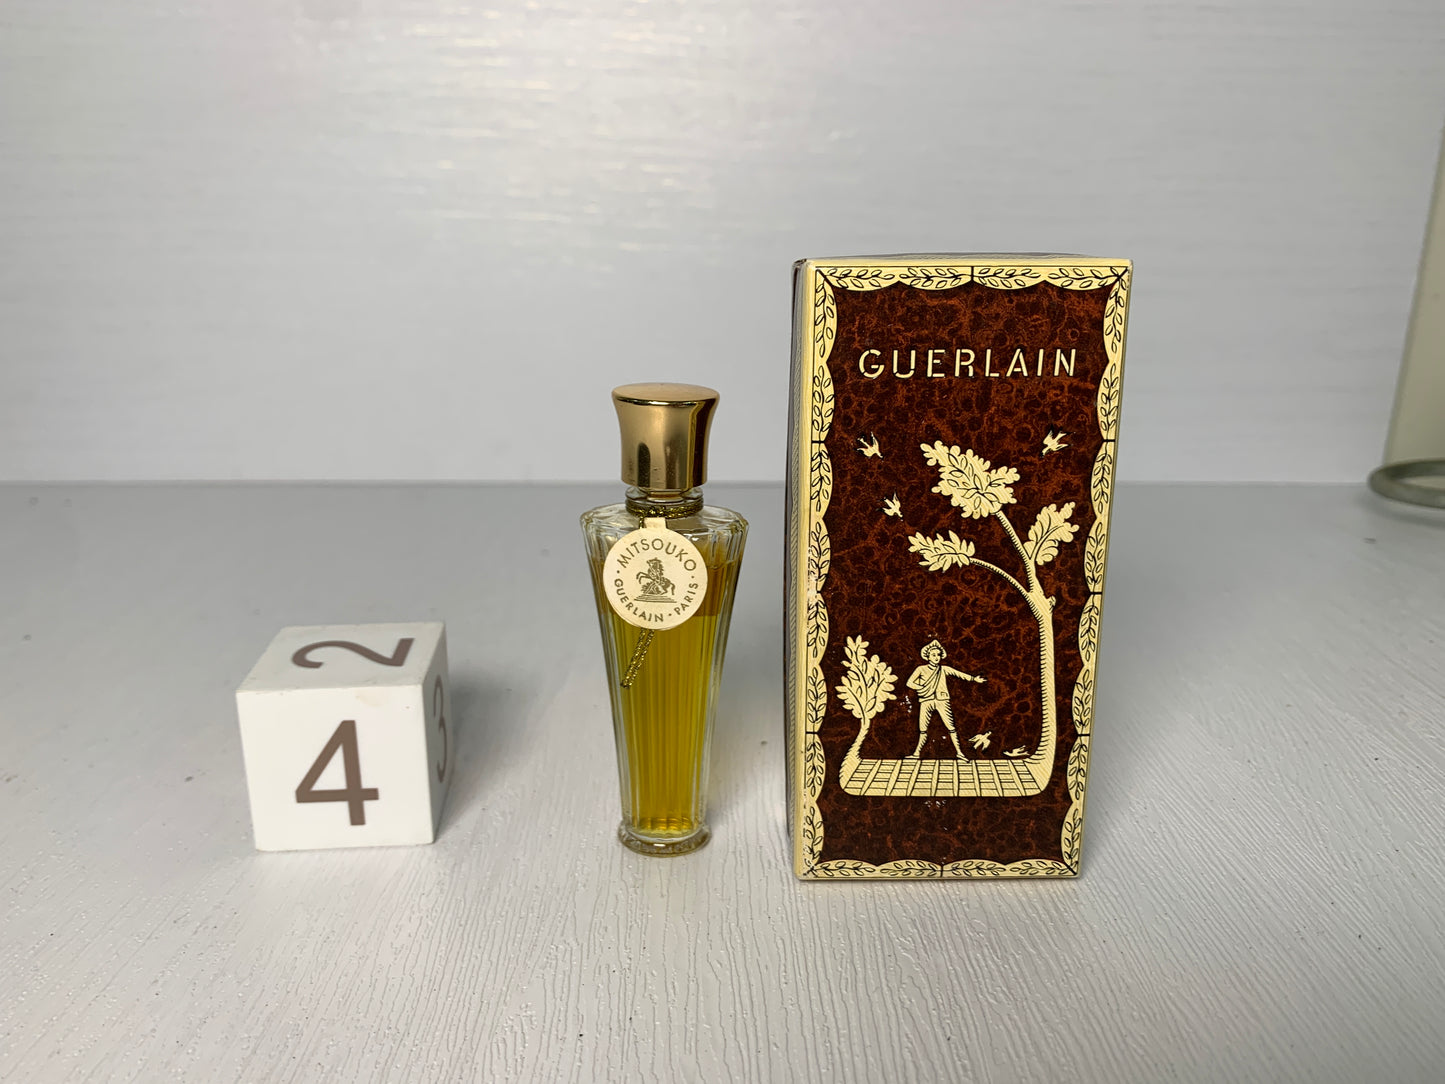 Rare Guerlain Mitsouko parfum perfume 7ml   - 12DEC22